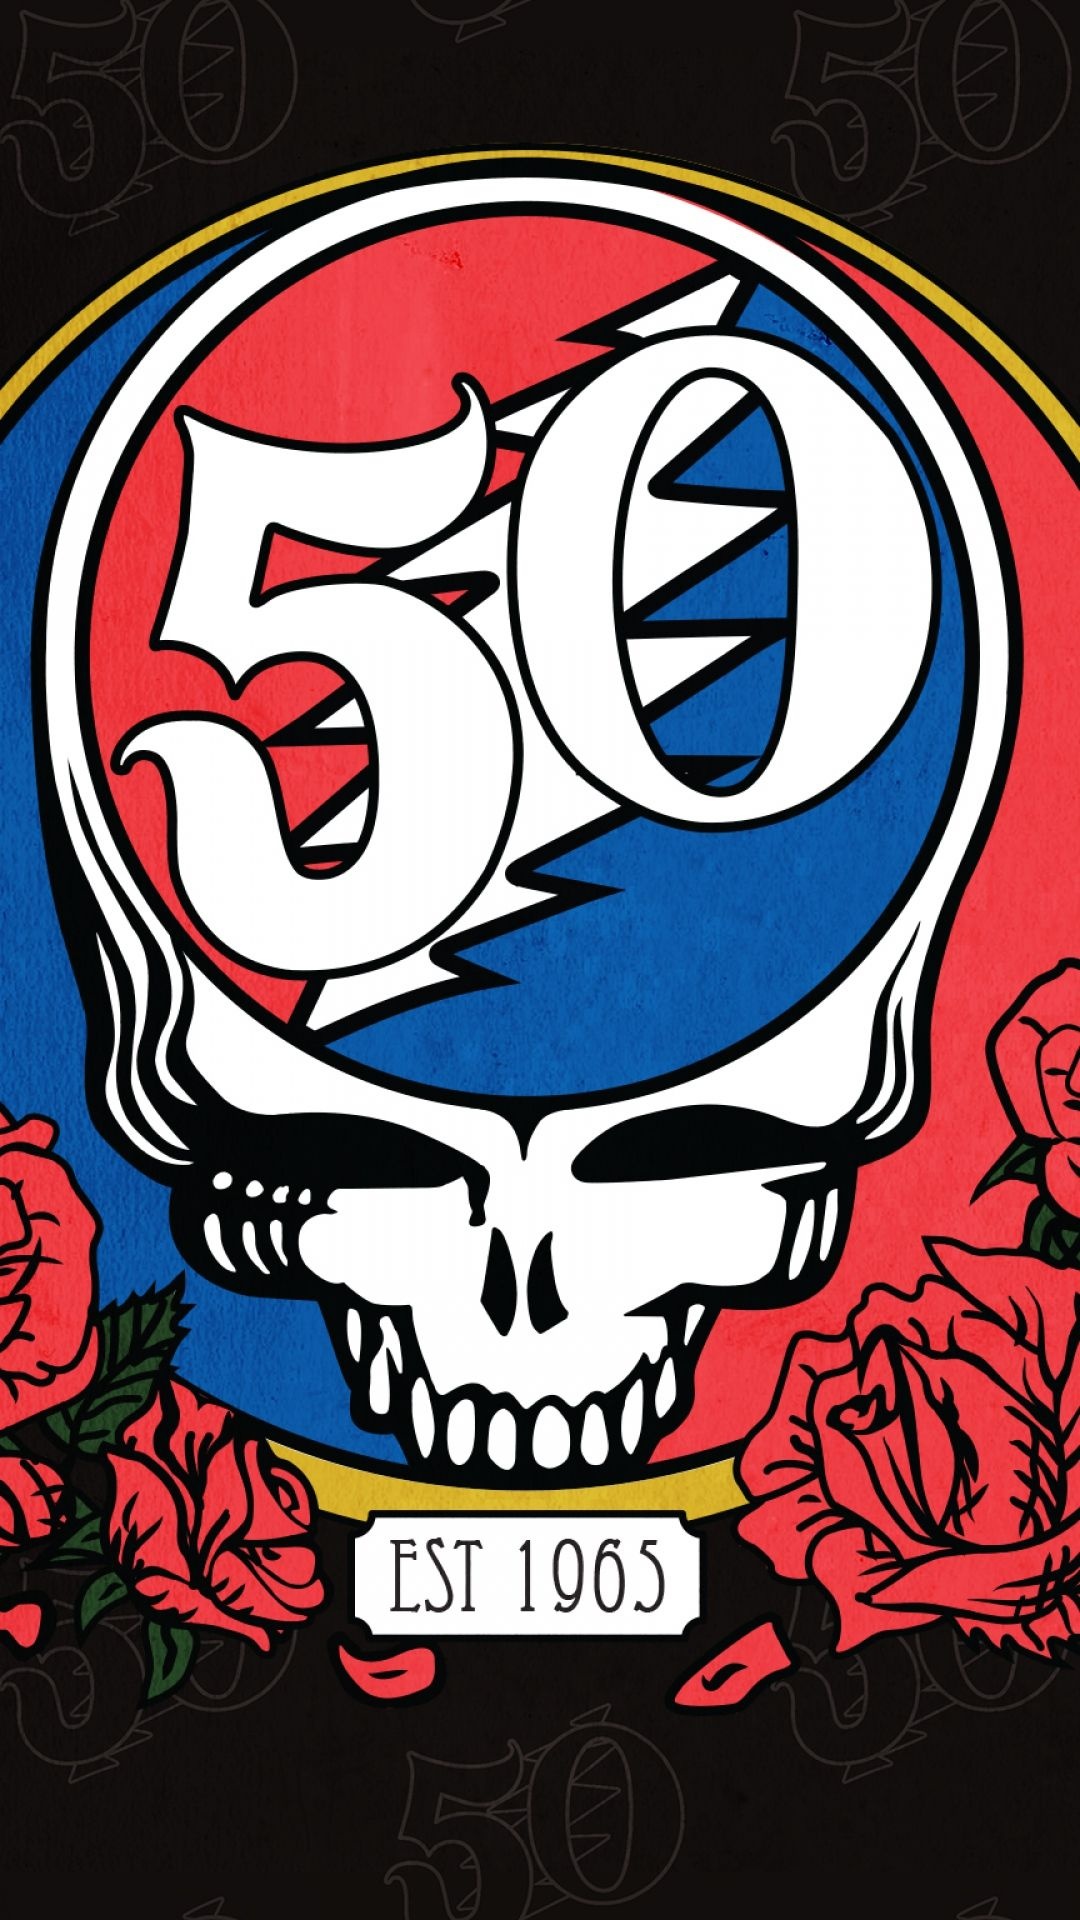 Grateful Dead: Fare Thee Well: Celebrating 50th anniversary, 2015, Levi's Stadium in Santa Clara, California. 1080x1920 Full HD Wallpaper.